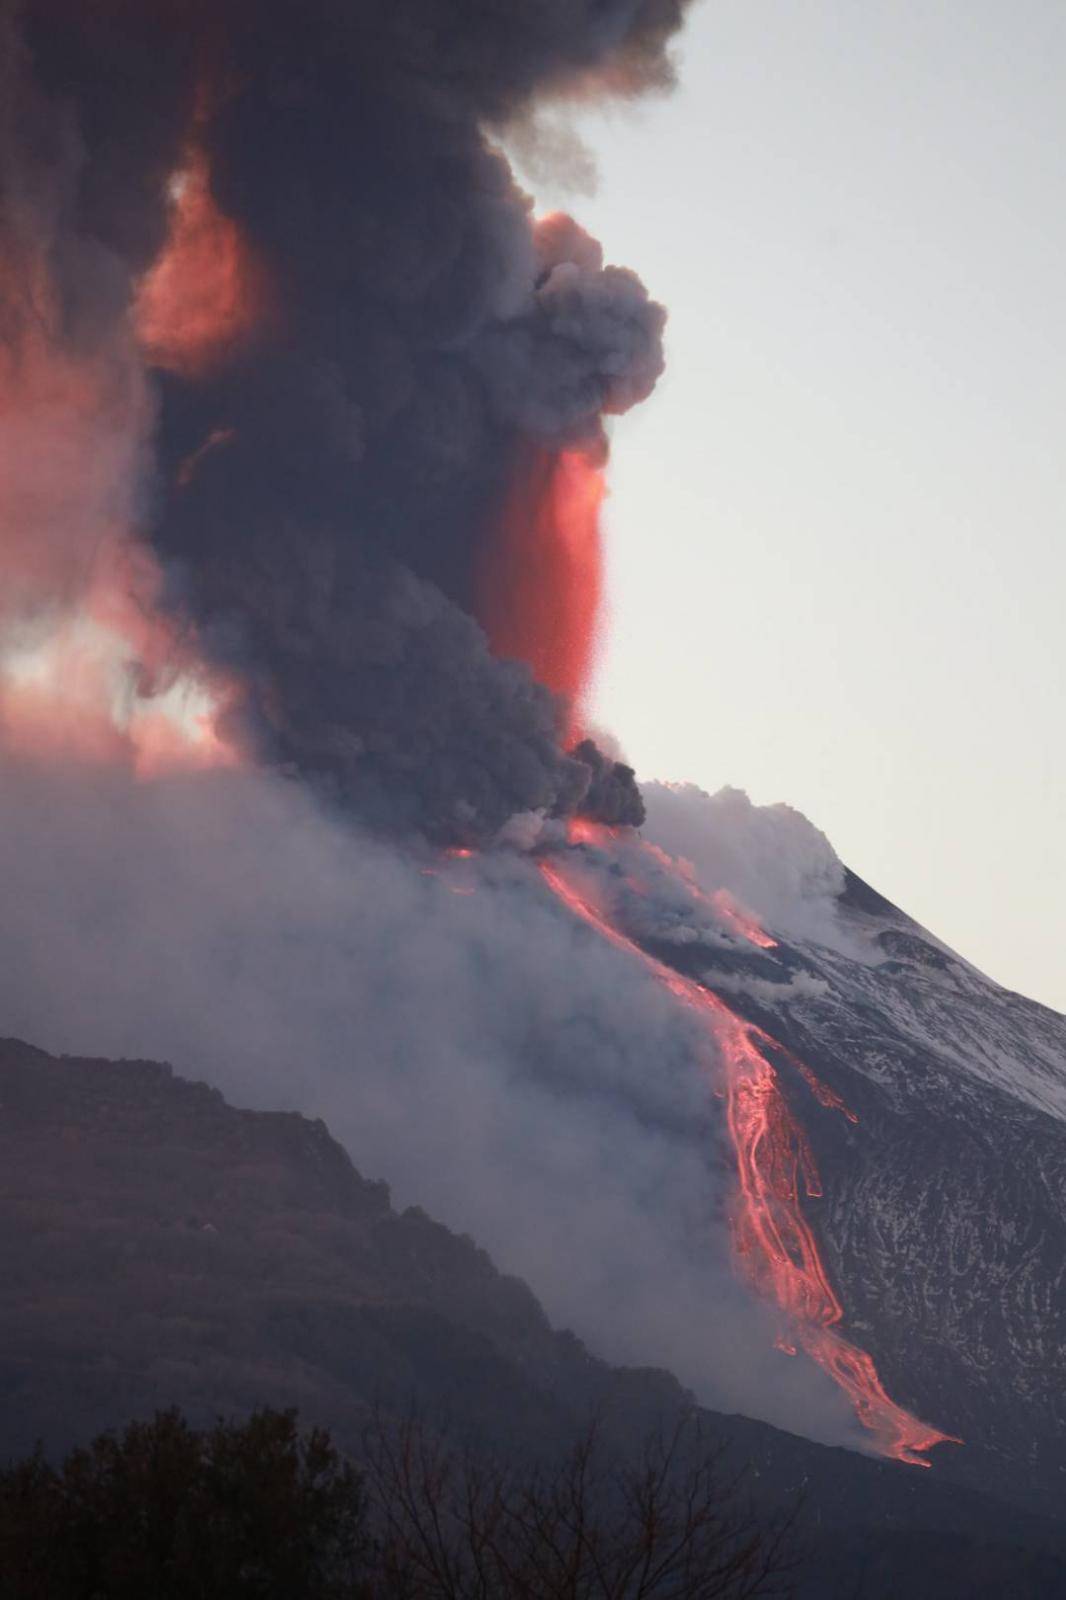 Spectacular eruption of Etna today